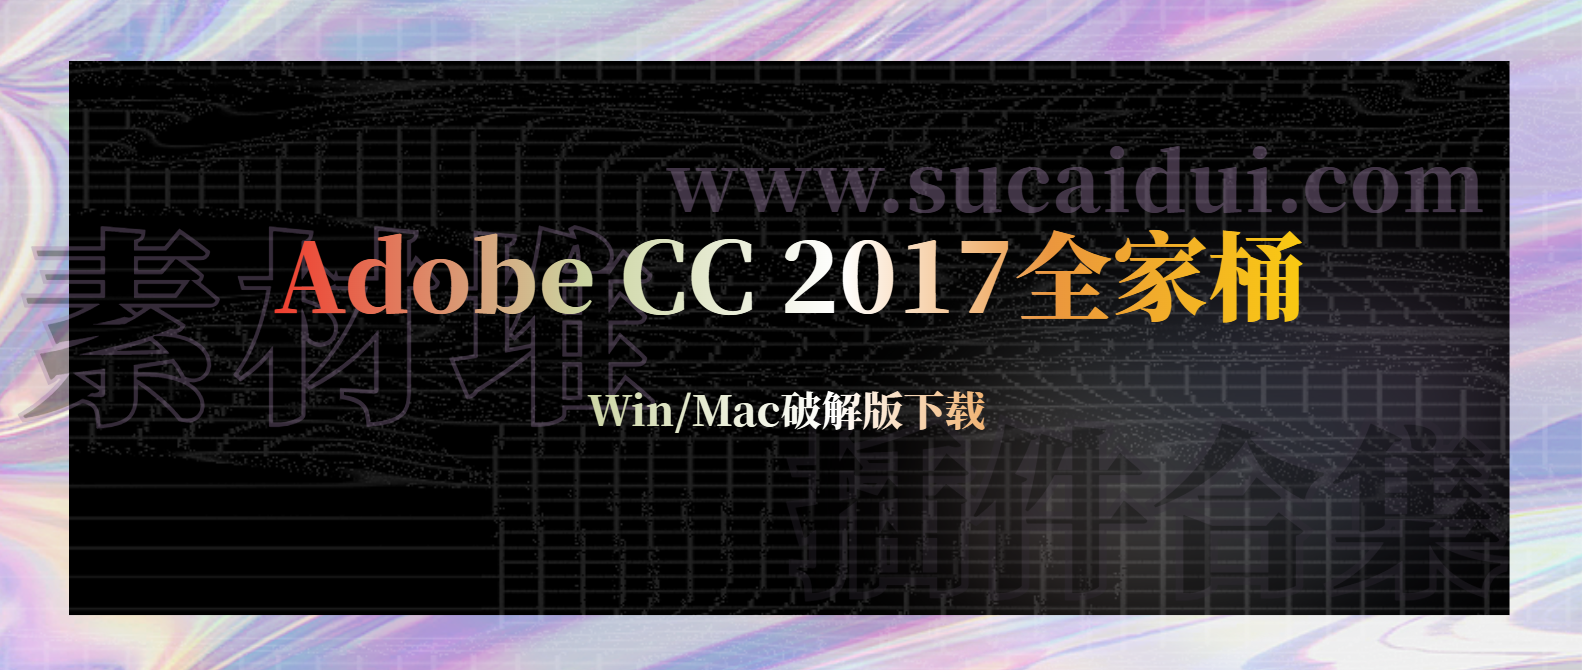 Adobe CC 2017全家桶大师版 Win/Mac